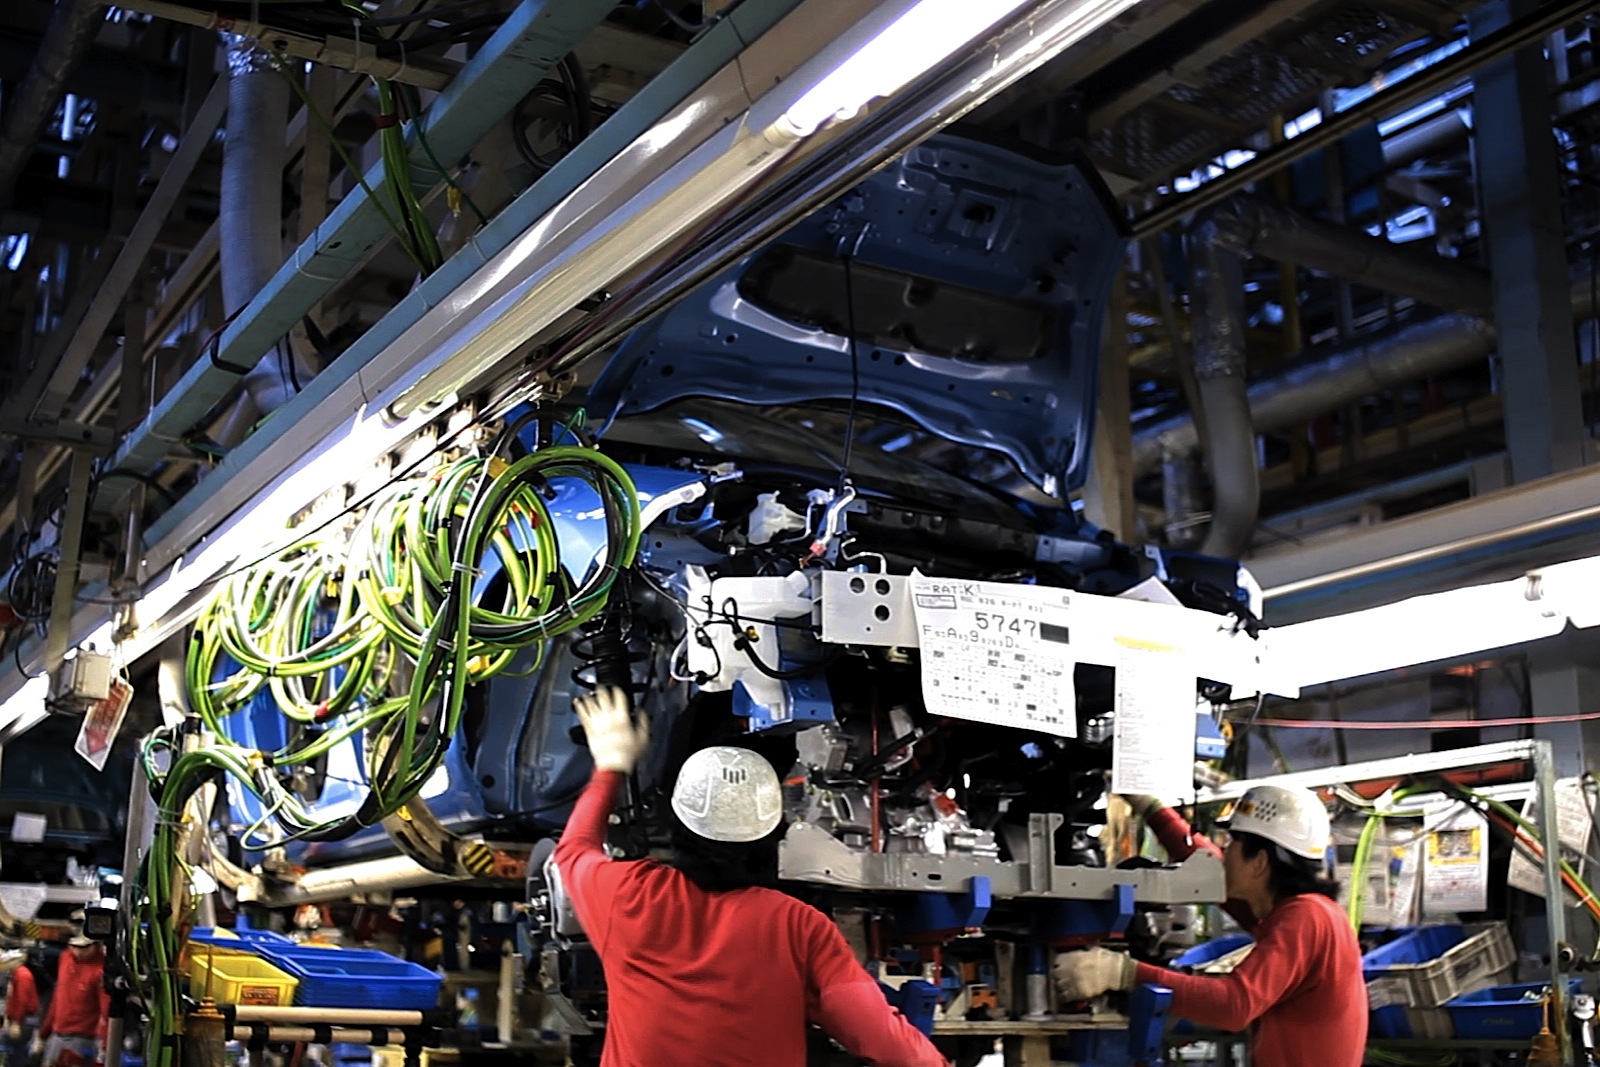 2011 Nissan Leaf production problems